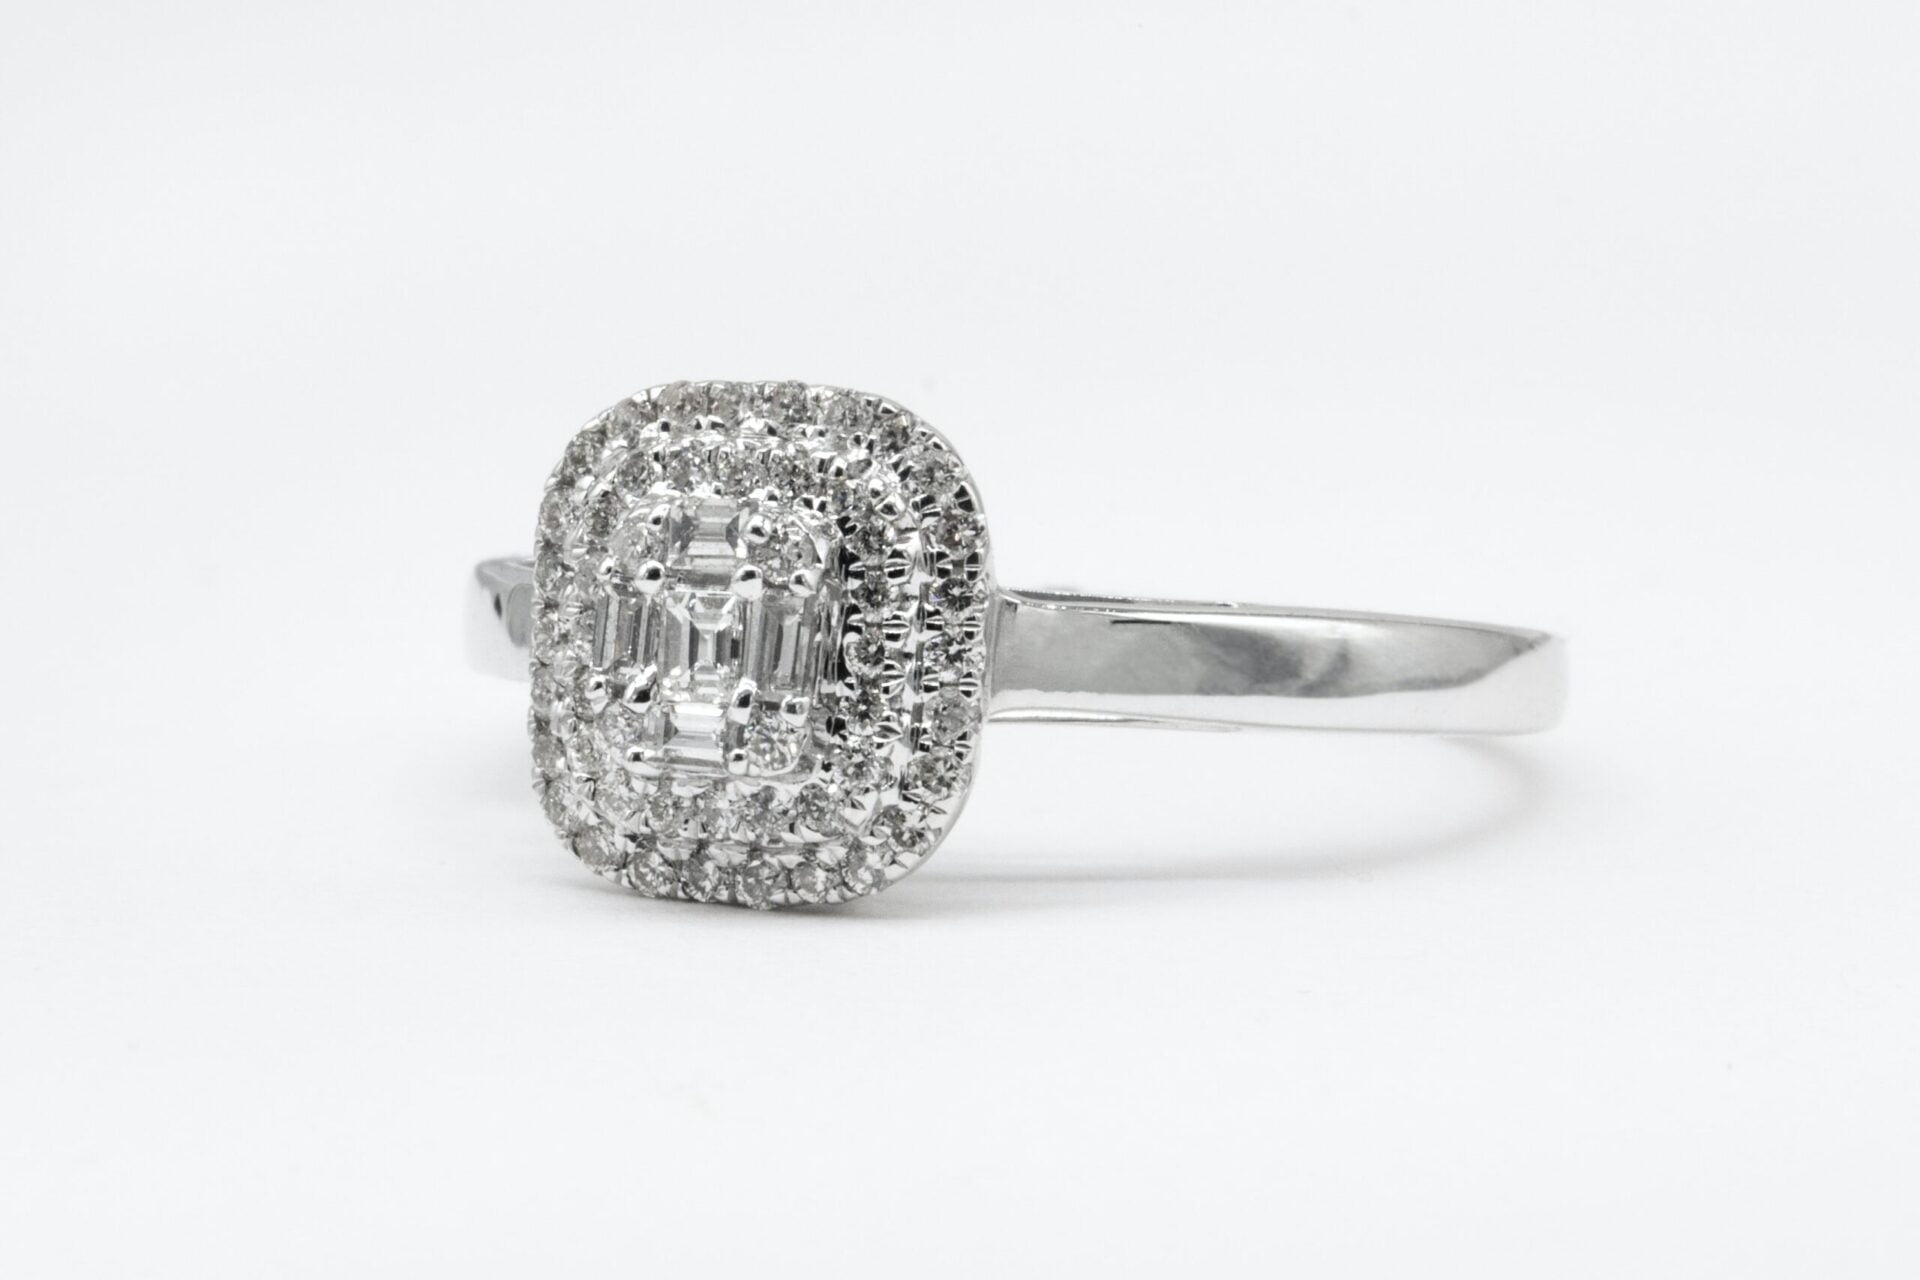 Elkasr Jewelry Marriage Ring